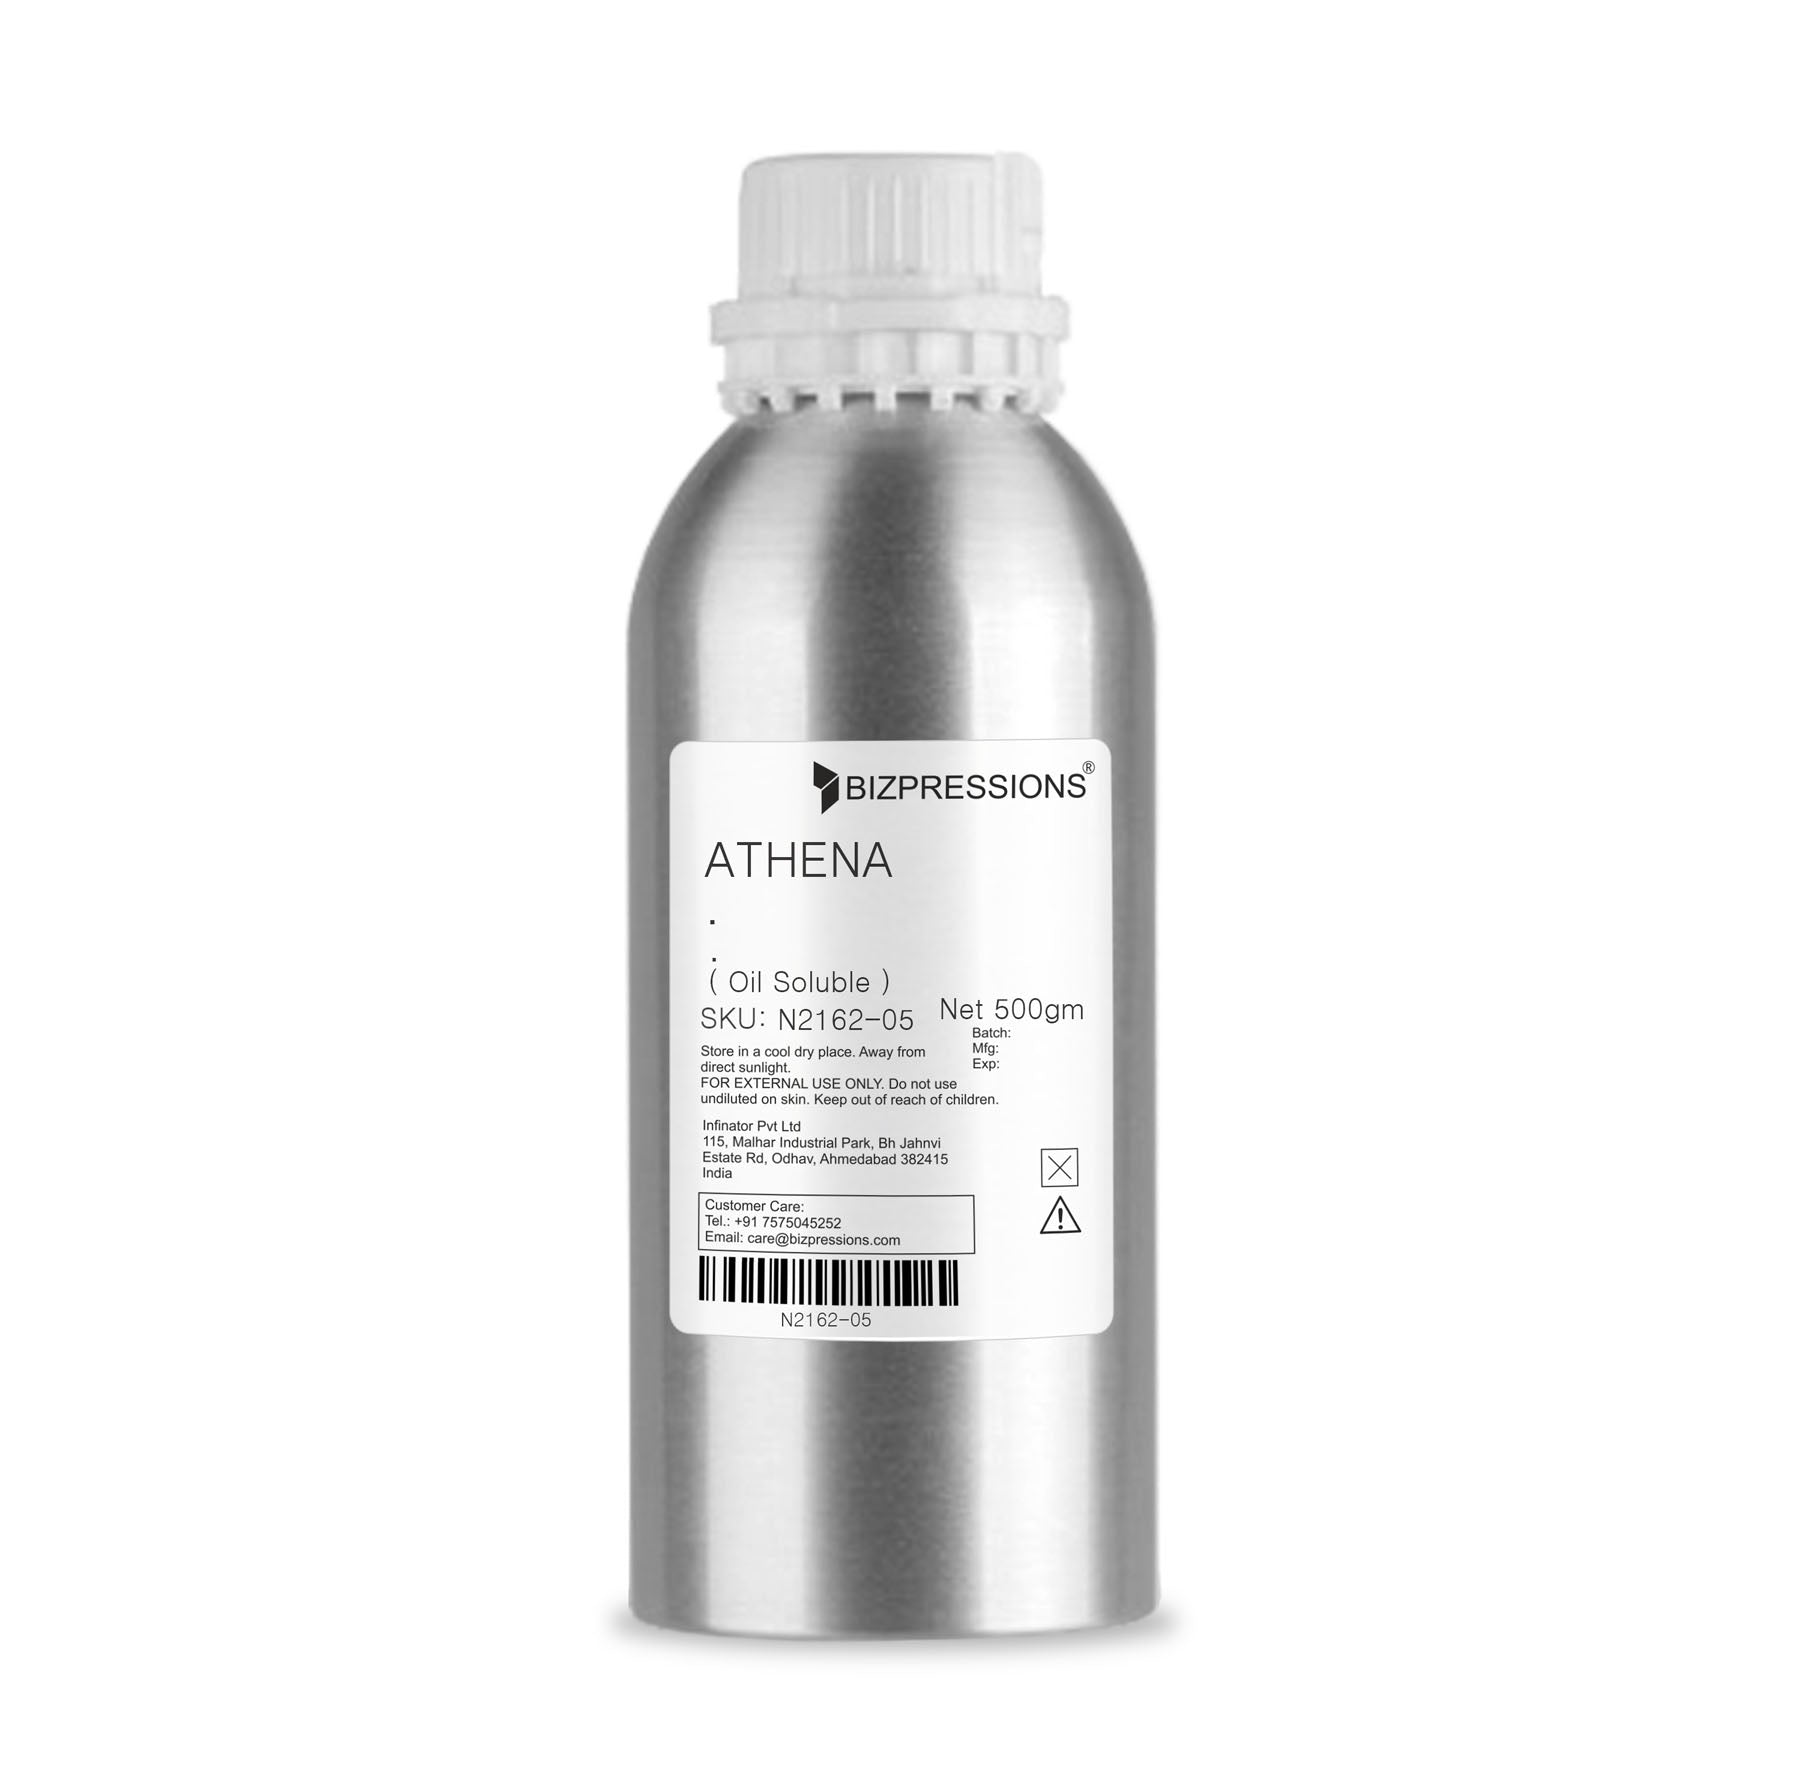 ATHENA - Fragrance ( Oil Soluble ) - 500 gm